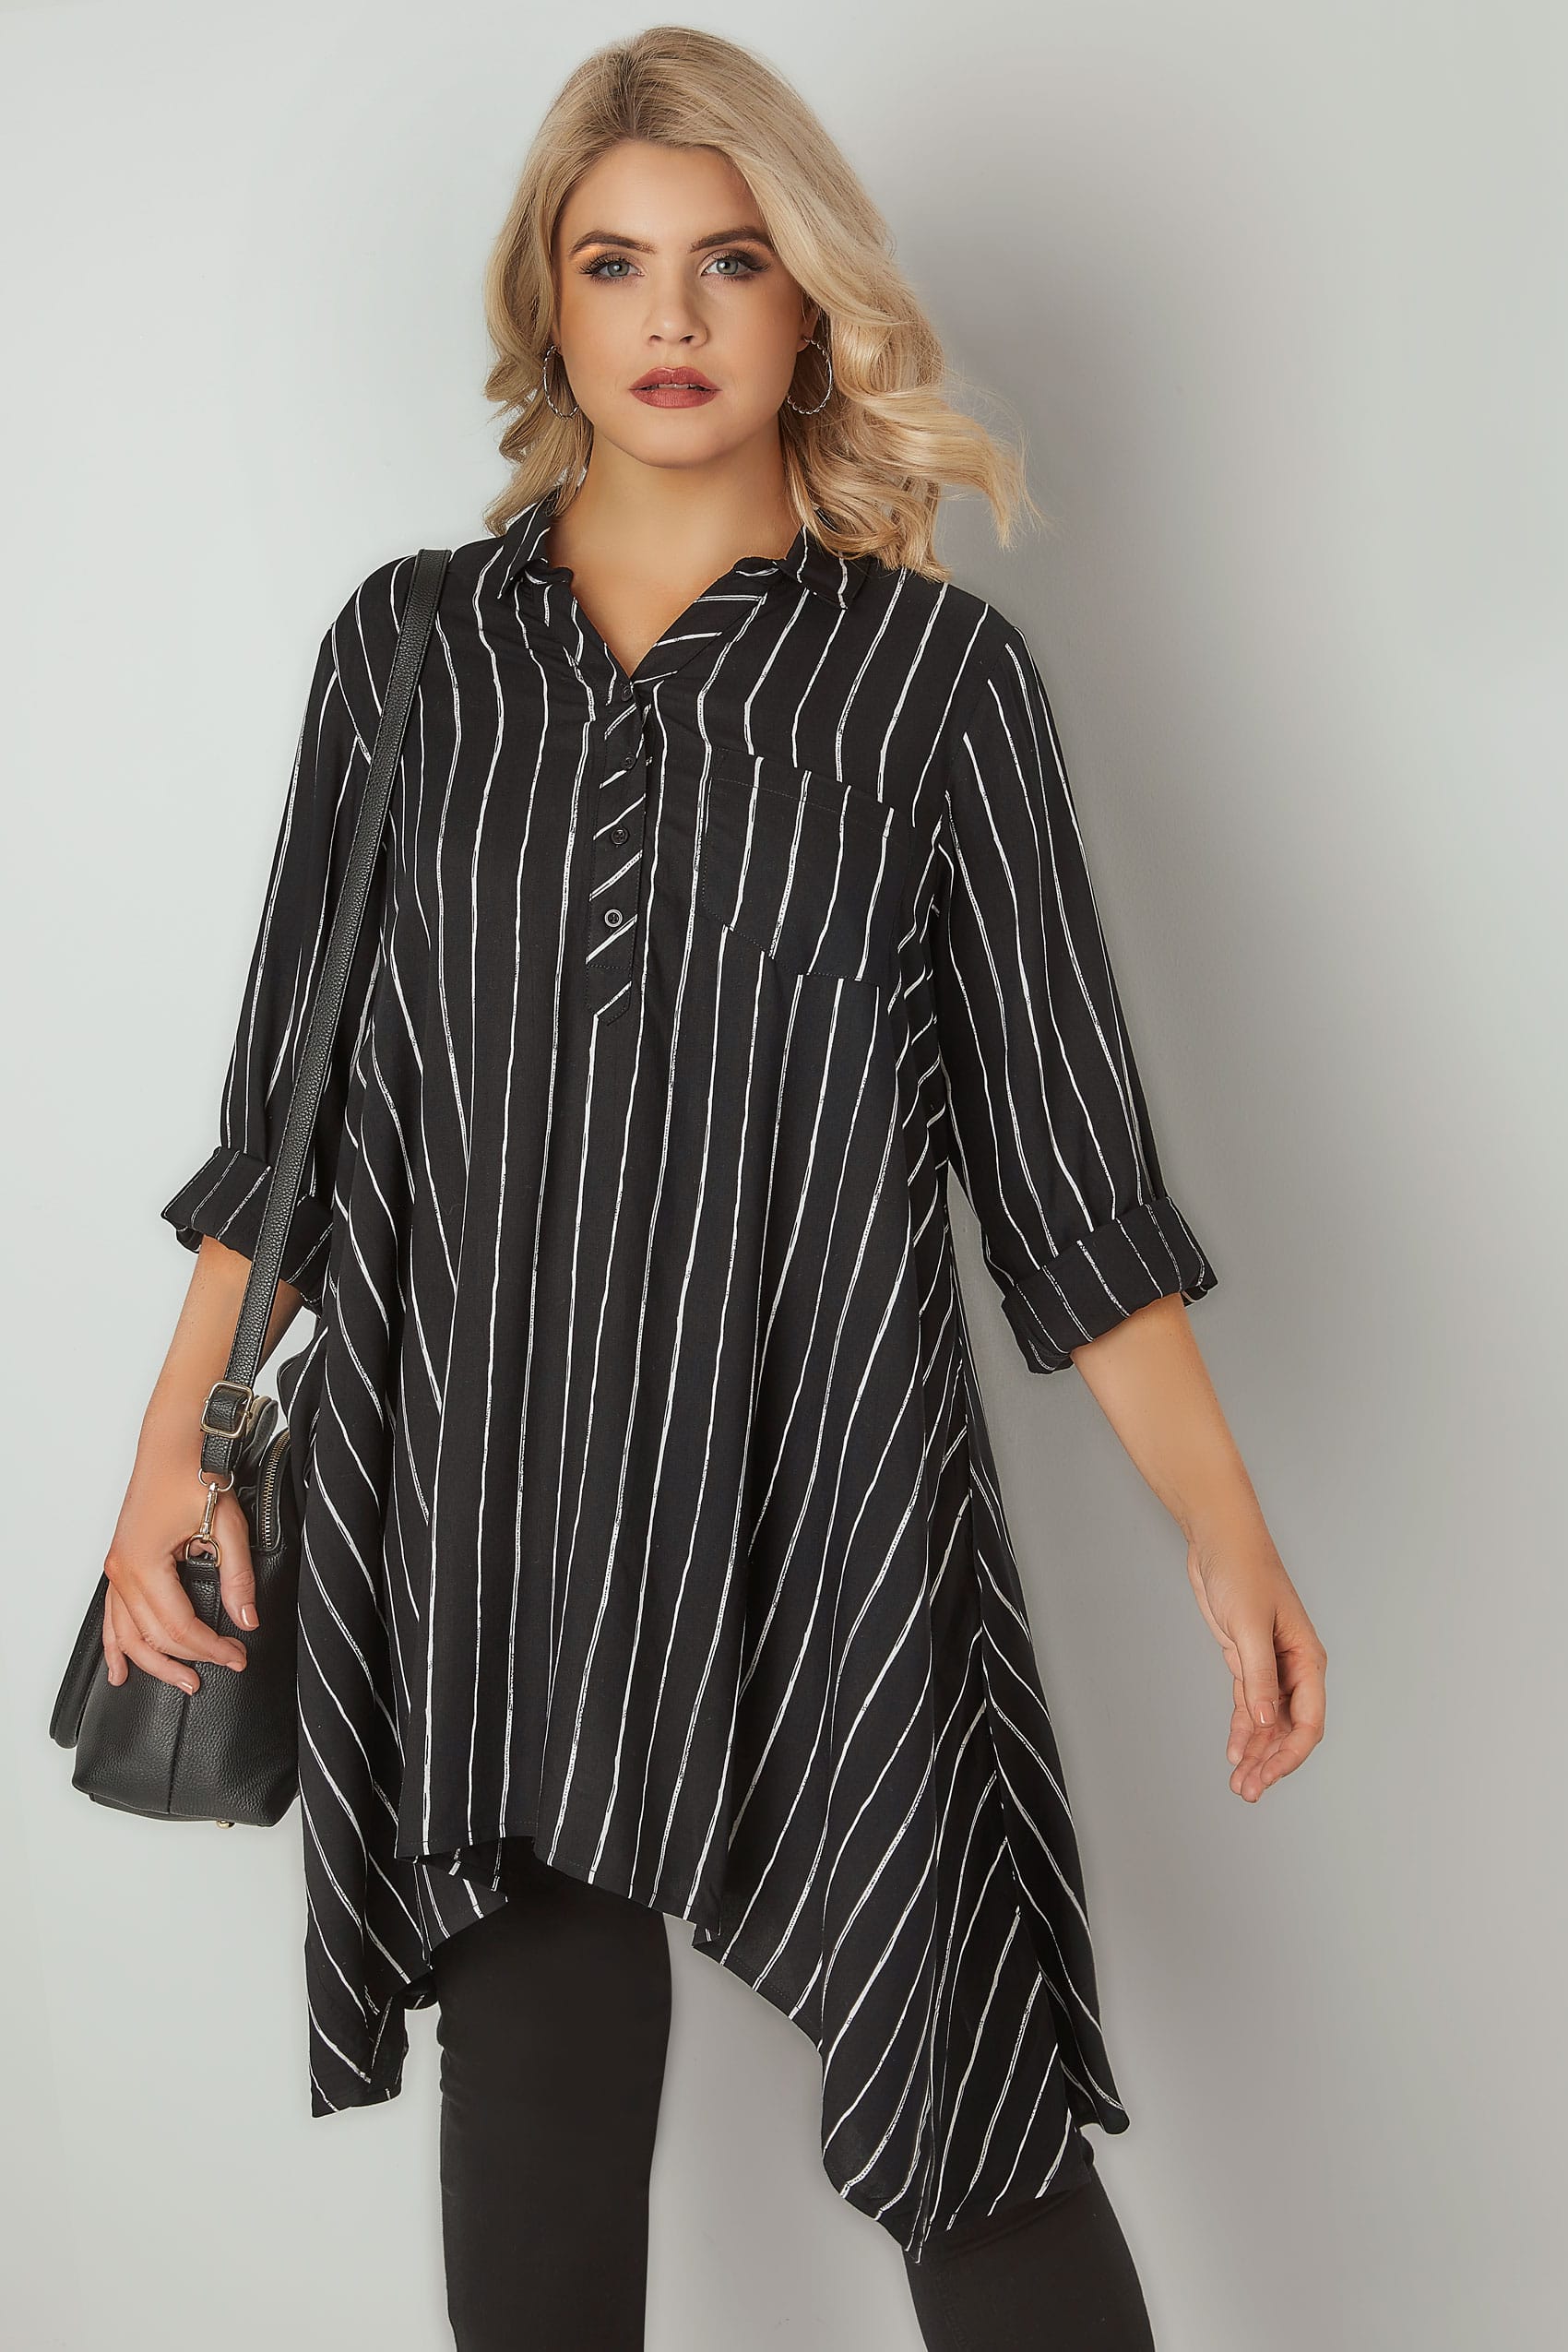 Black & White Asymmetric Stripe Shirt, Plus size 16 to 36